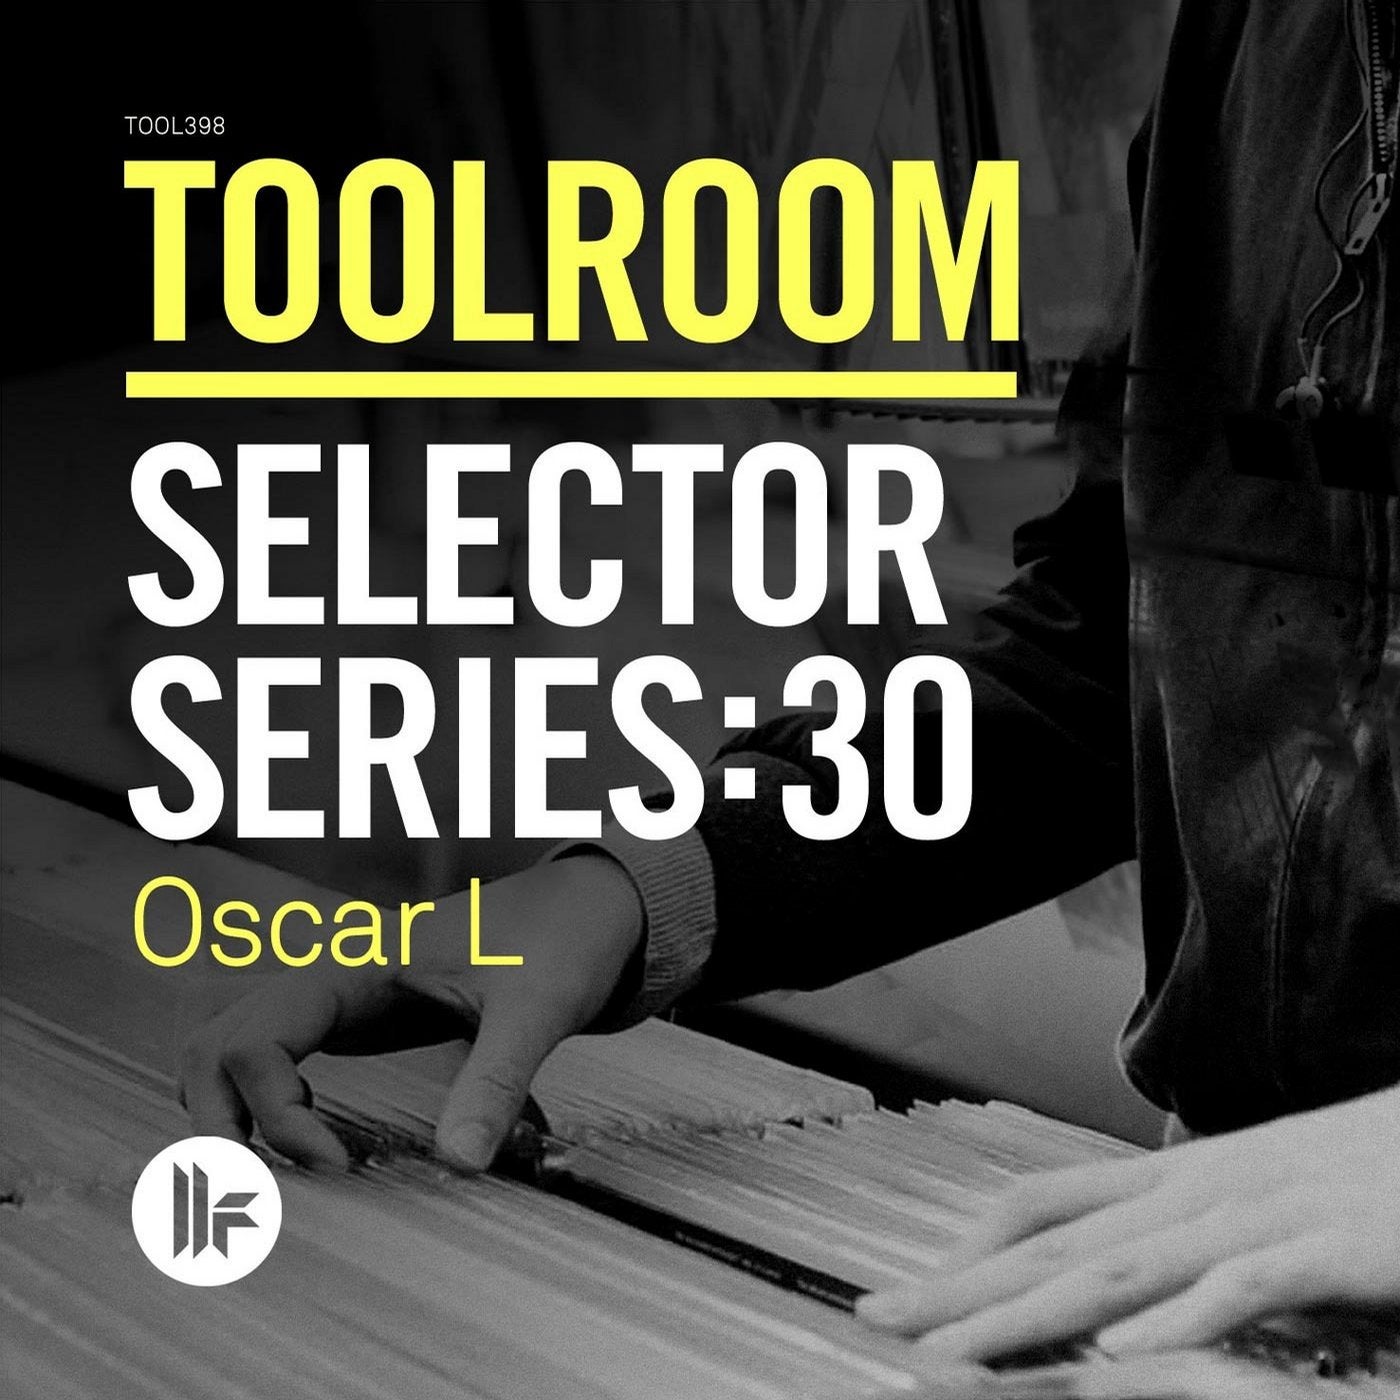 Toolroom Selector Series: 30 Oscar L